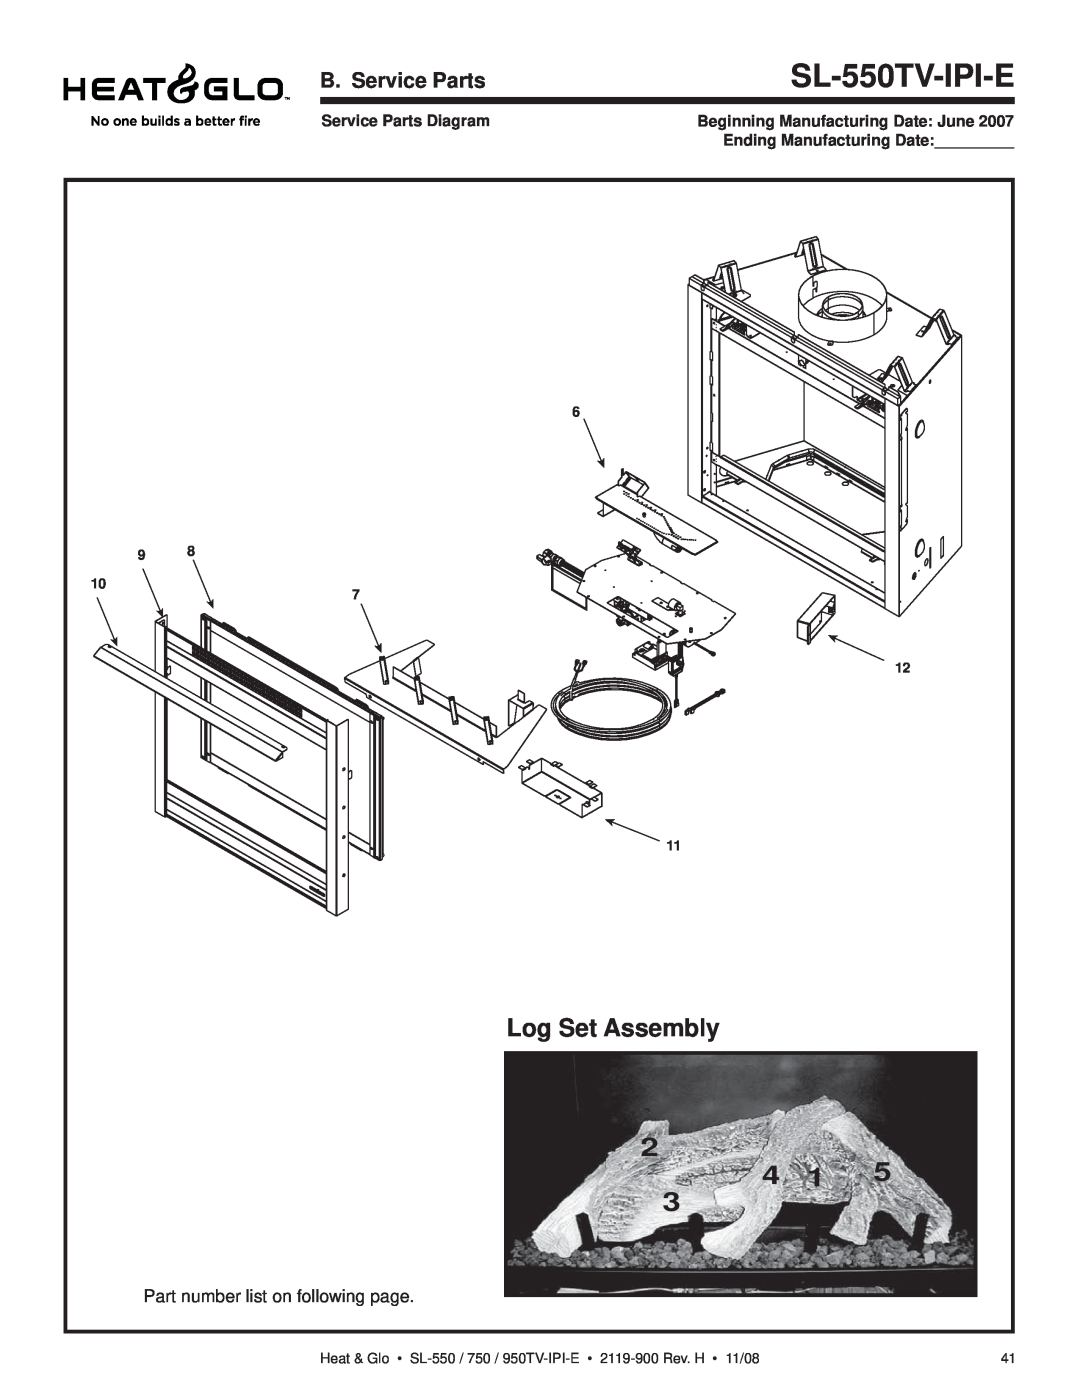 Hearth and Home Technologies SL-950TV-IPI-E SL-550TV-IPI-E, Log Set Assembly, B. Service Parts, Service Parts Diagram 